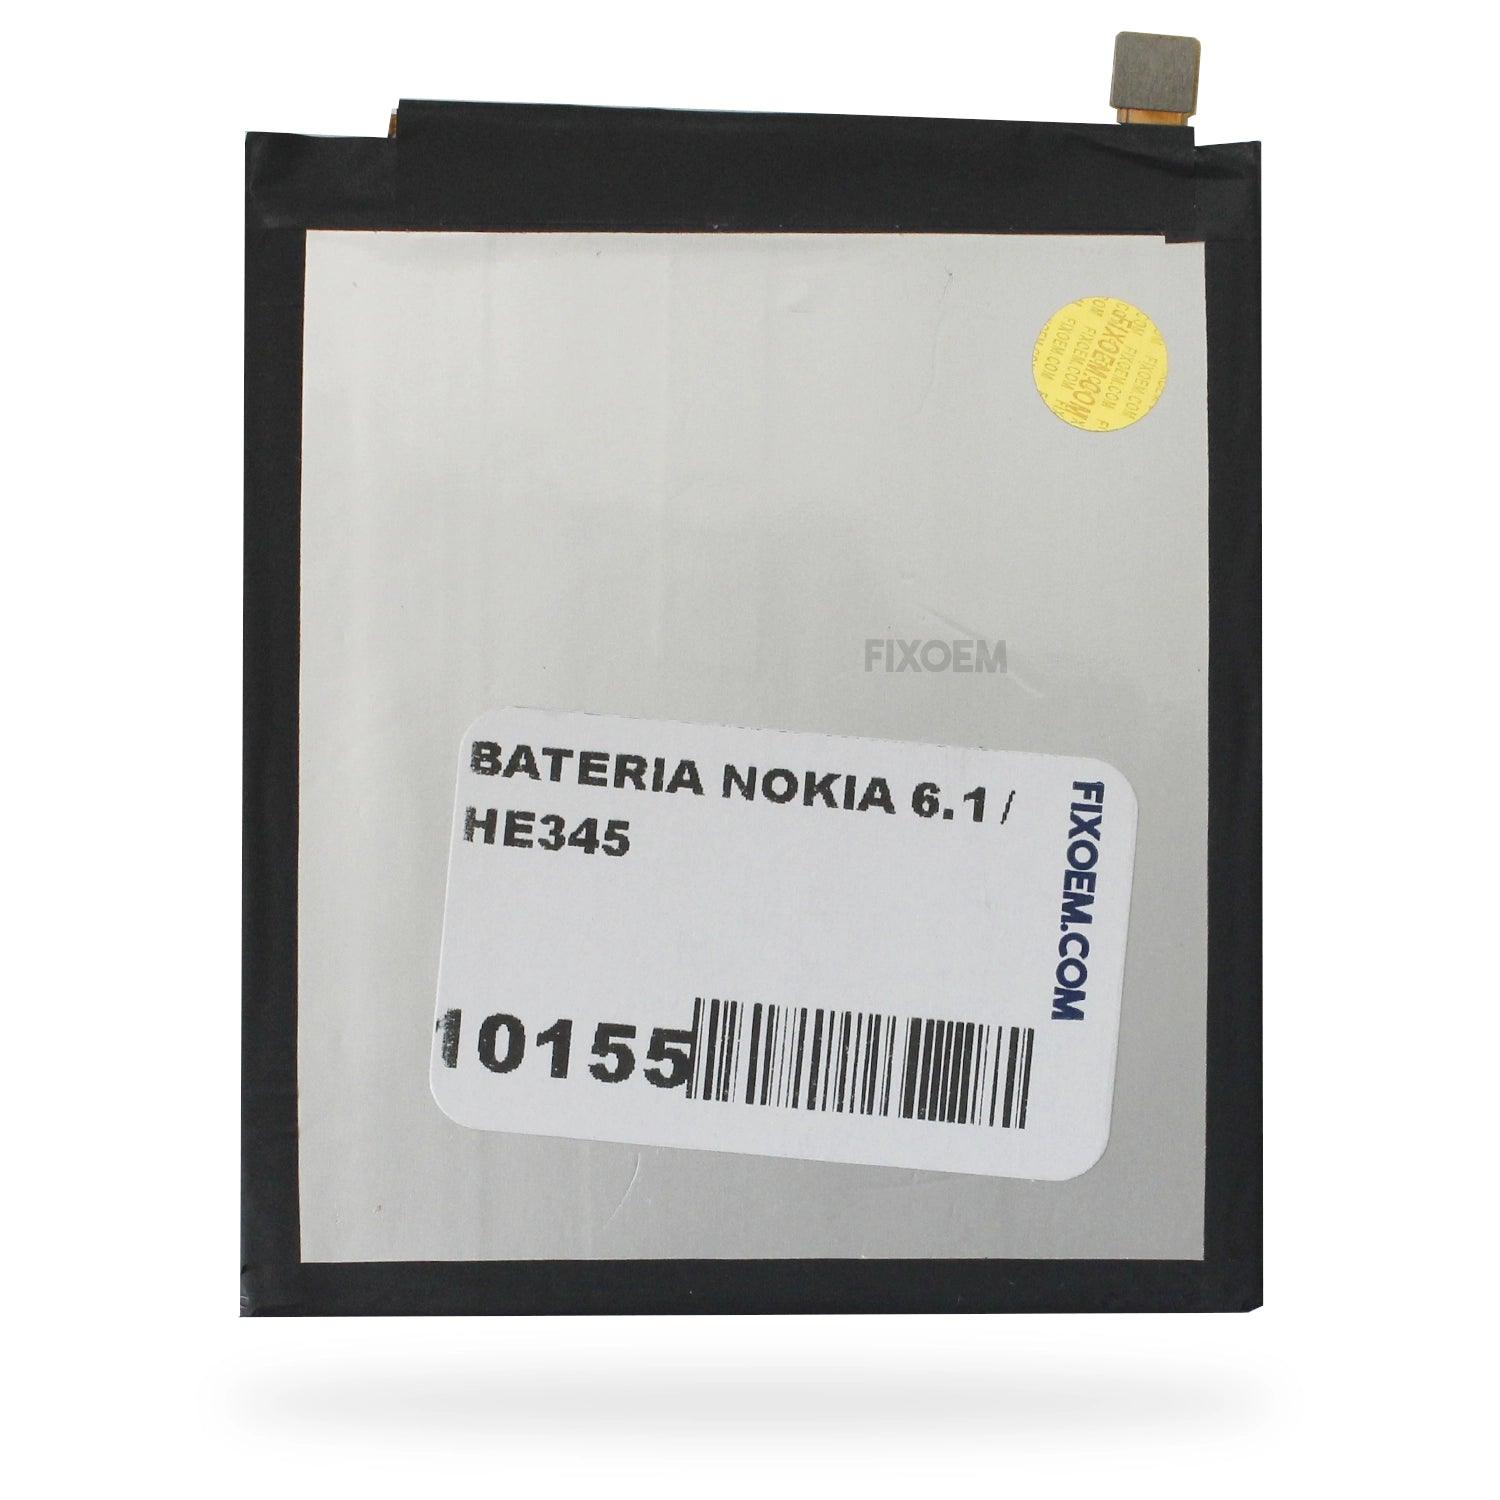 Bateria Nokia 6.1 Ta-1043, Ta-1045, Ta-1054, Ta-1050, Ta-1068 He345. a solo $ 120.00 Refaccion y puestos celulares, refurbish y microelectronica.- FixOEM